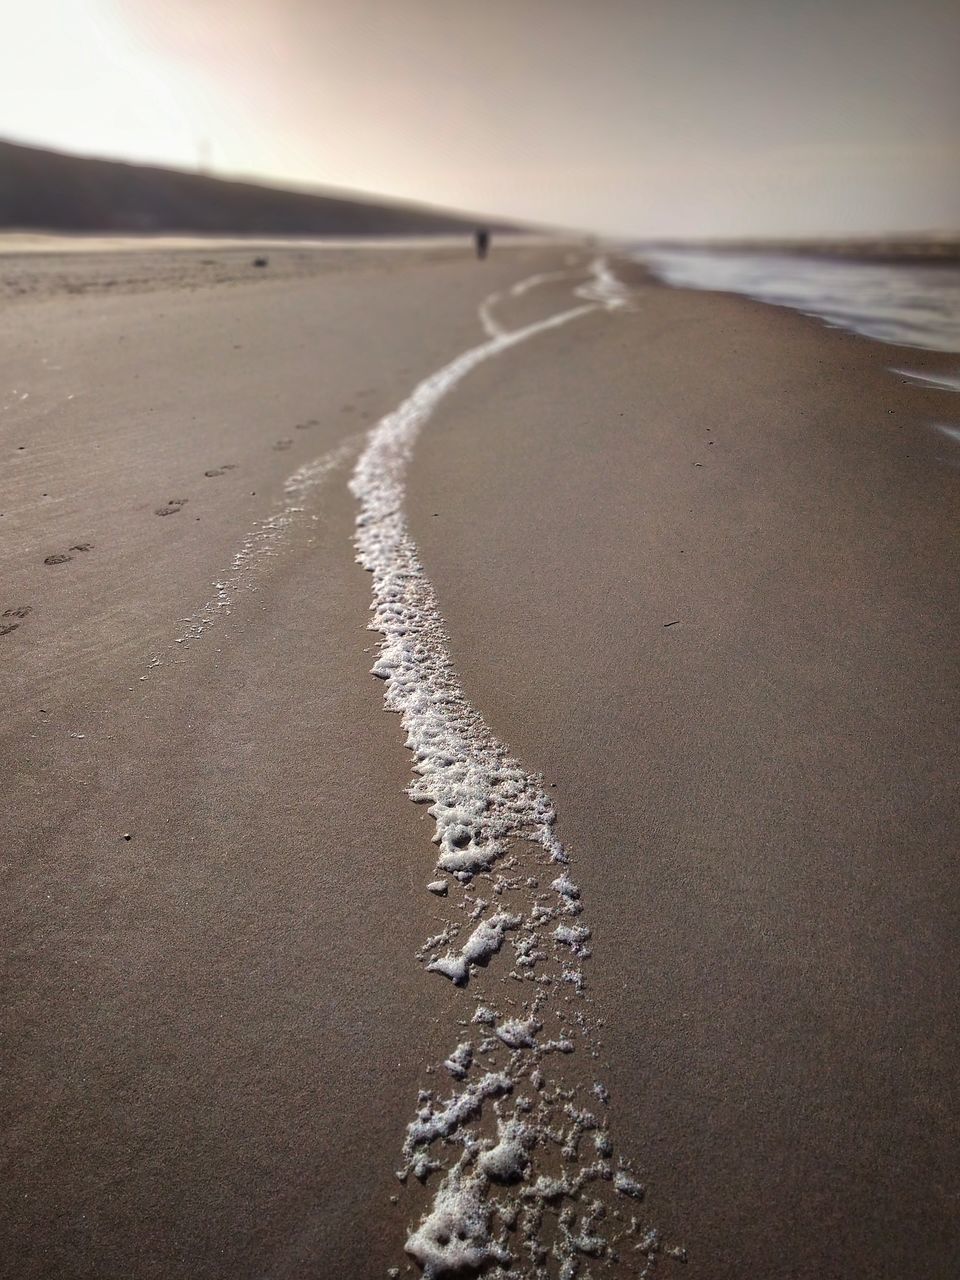 SURFACE LEVEL OF SANDY BEACH